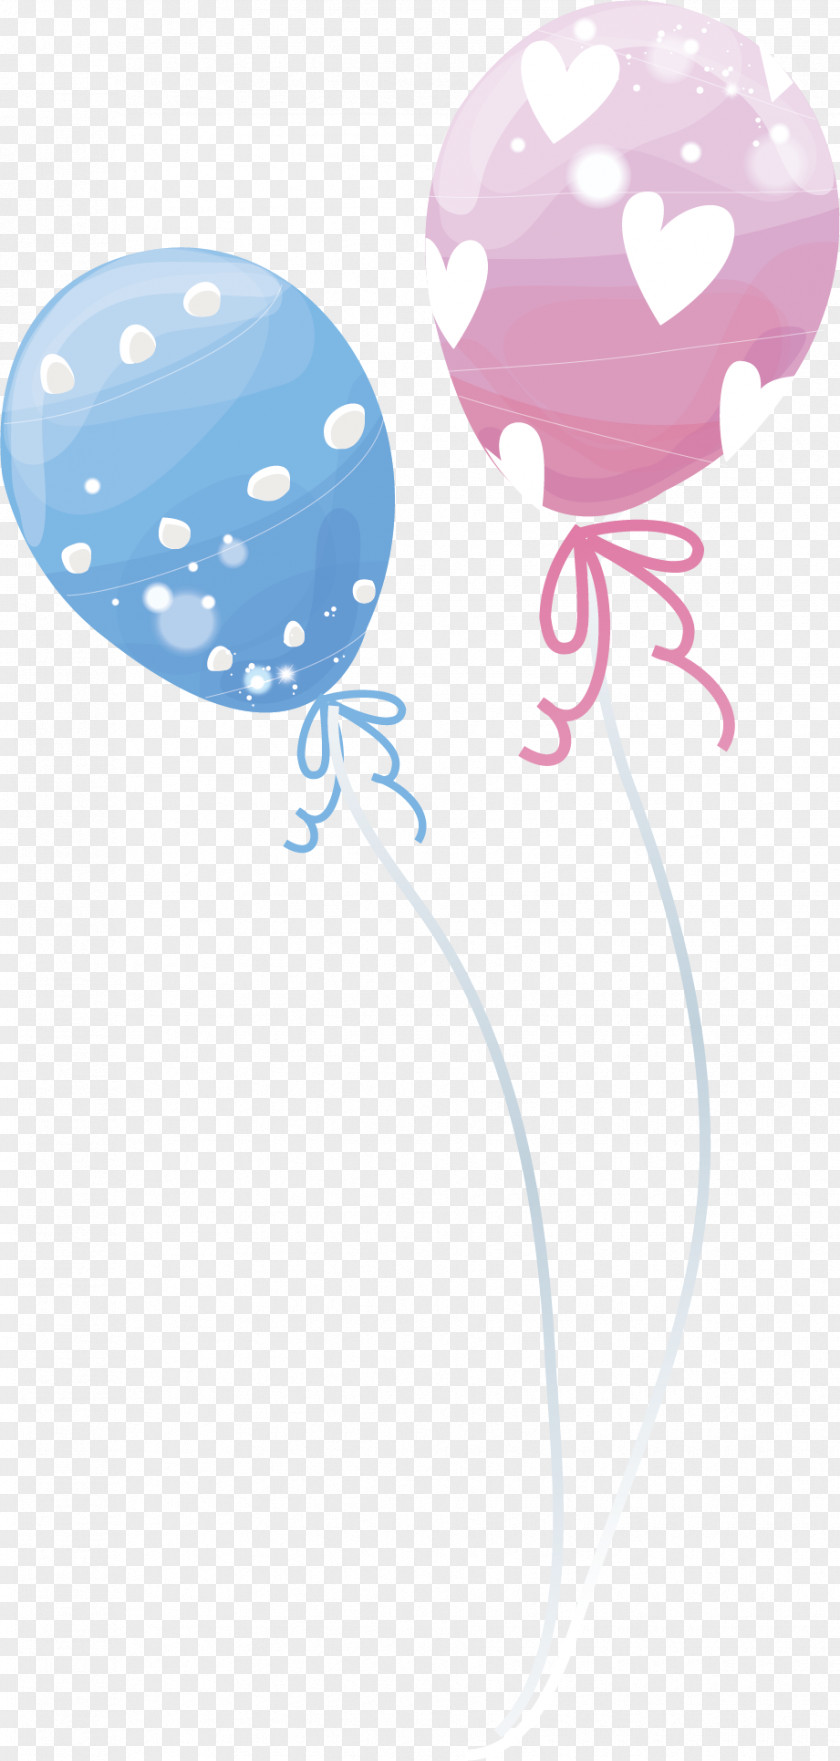 Balloon Creative Illustration PNG